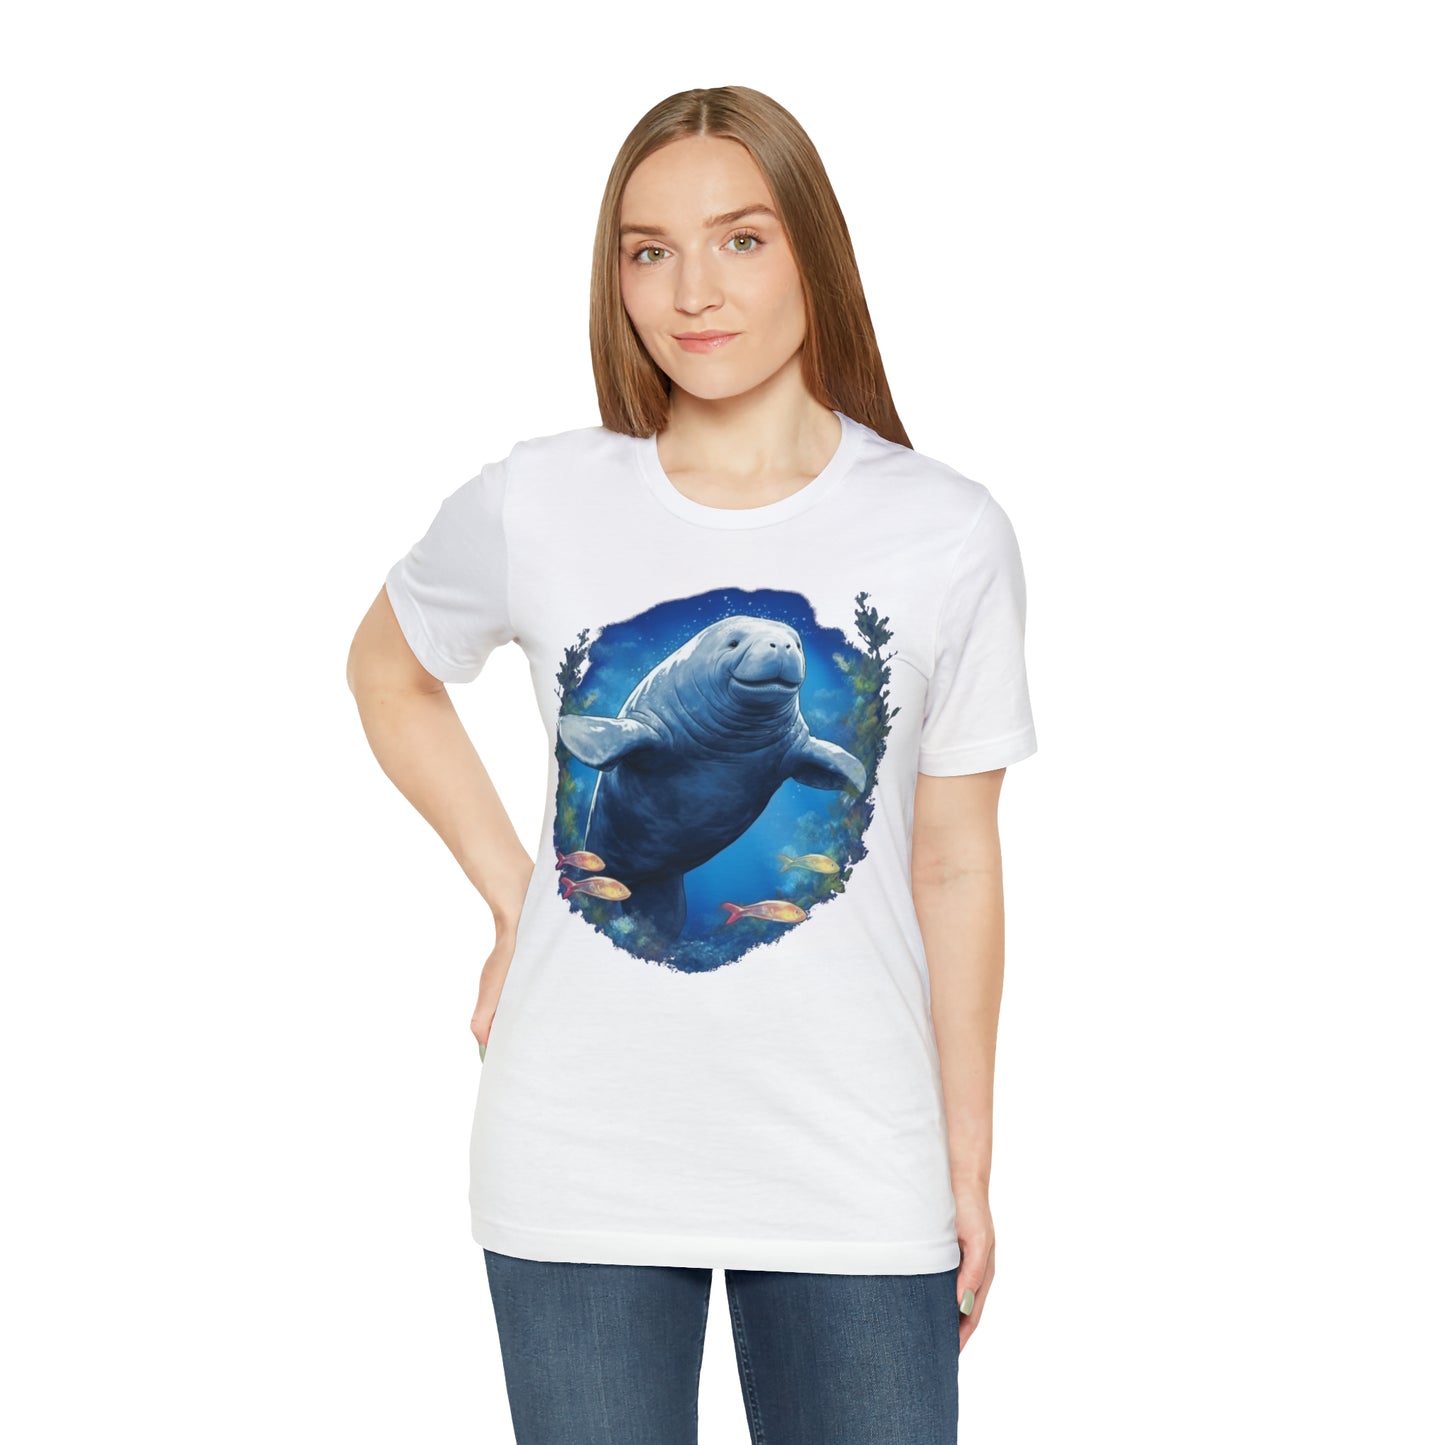 Manatee Tshirt, Ocean Sea Marine Animal Men Women Adult Aesthetic Graphic Crewneck Short Sleeve Tee Shirt Top Starcove Fashion